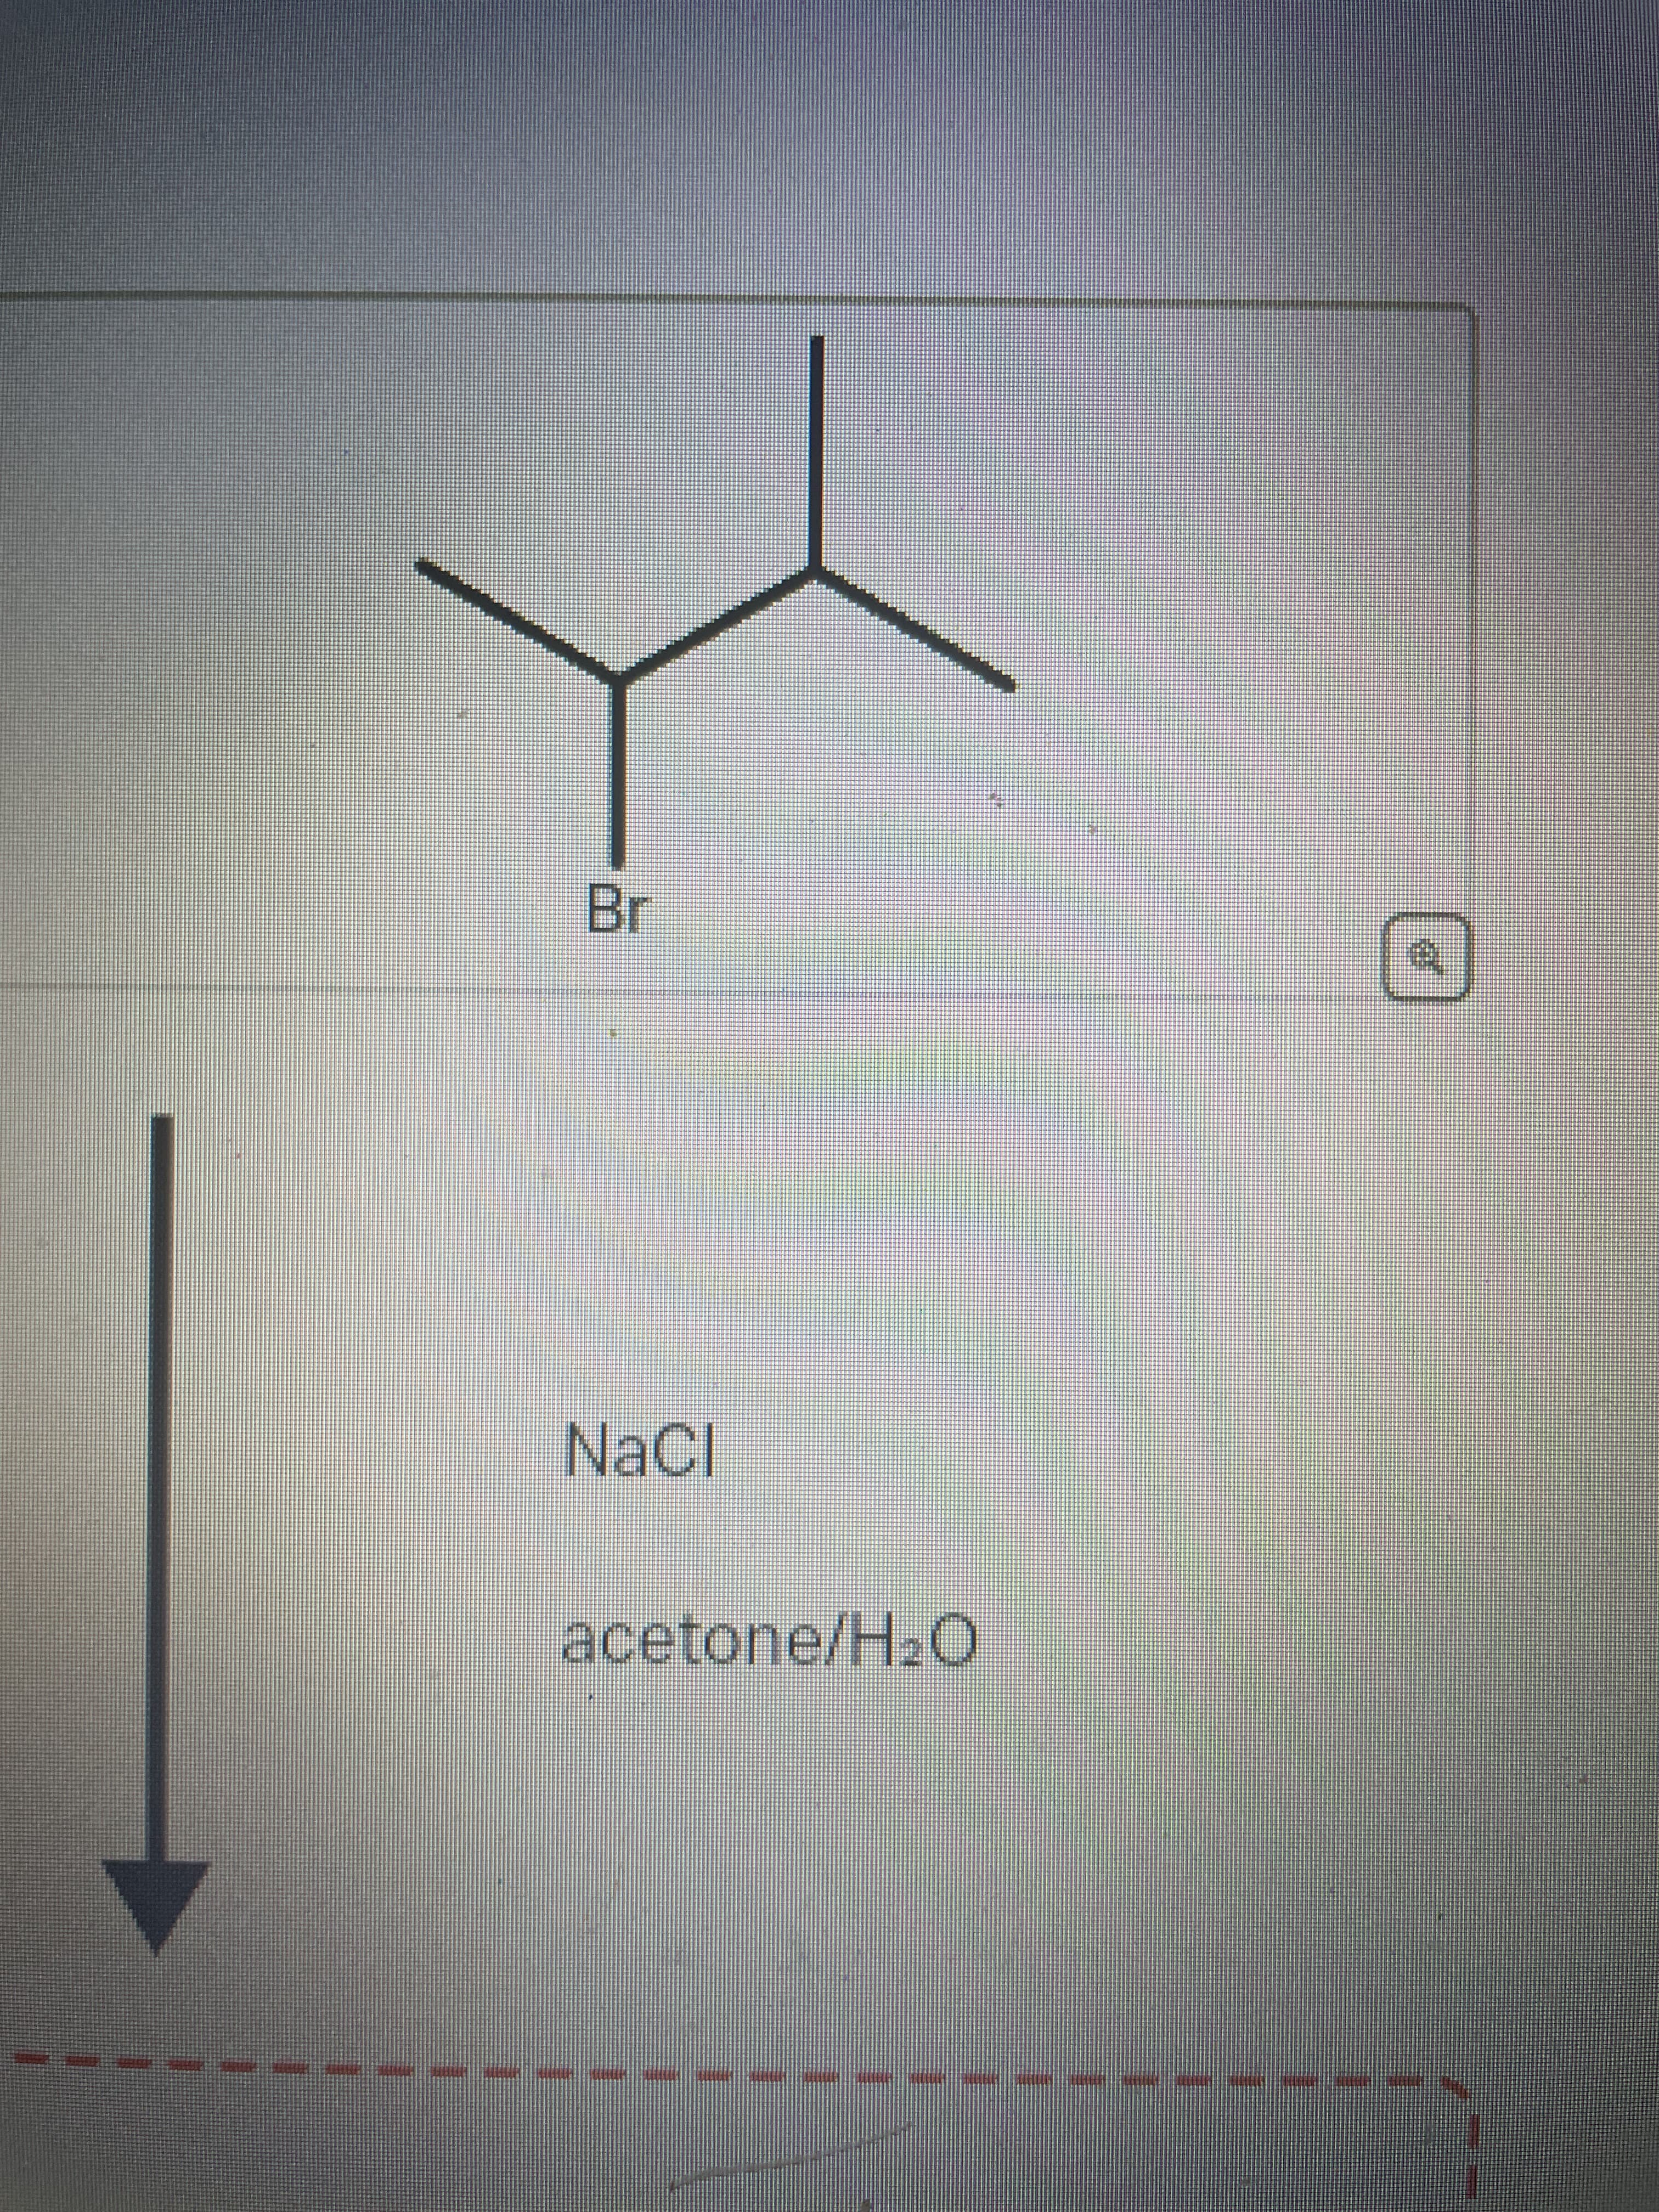 Br
NaCl
acetone/H₂O
-
-
€